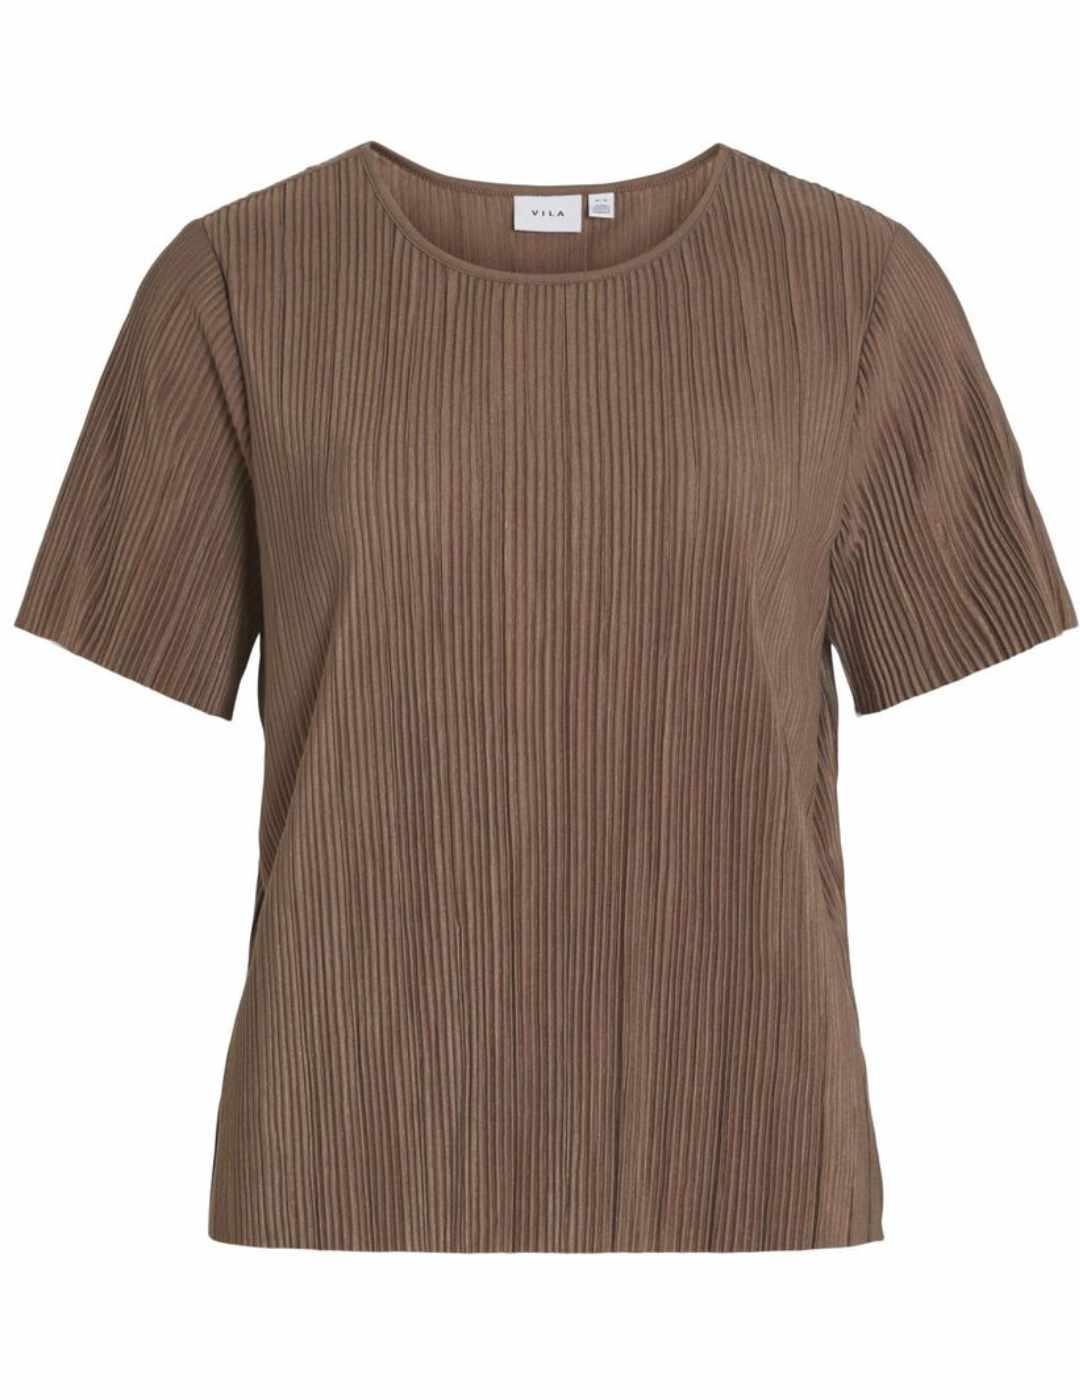 Camiseta Vila Plisa marrón Regular de manga corta para mujer